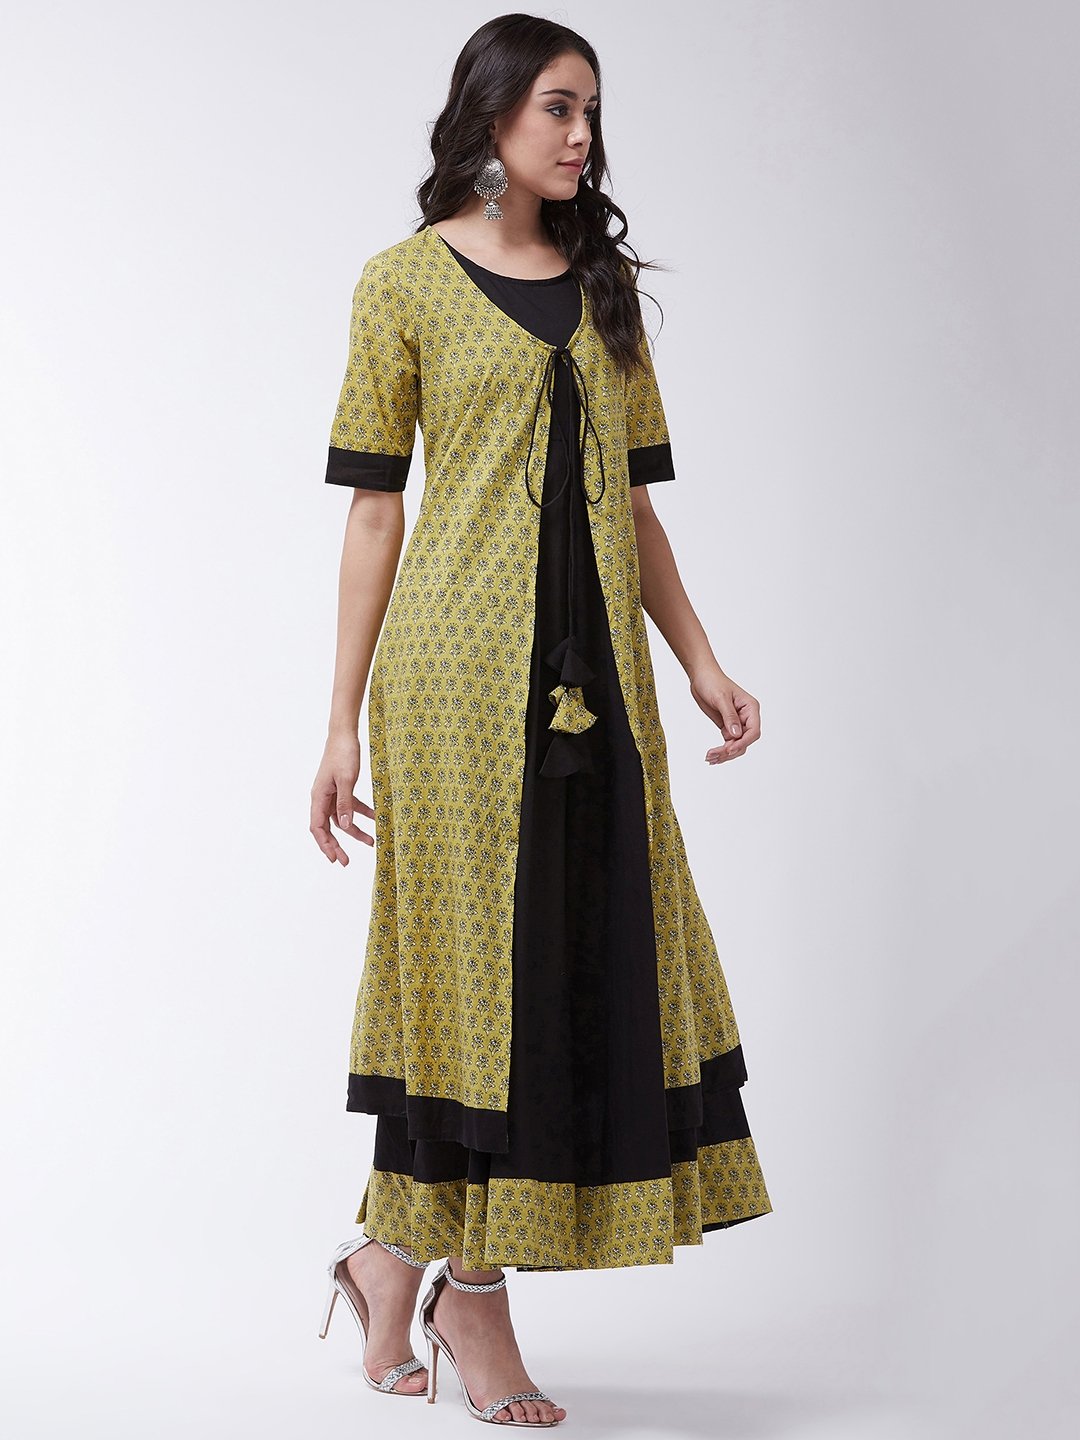 Black Anarkali Dress With Yellow Floral Print Jacket